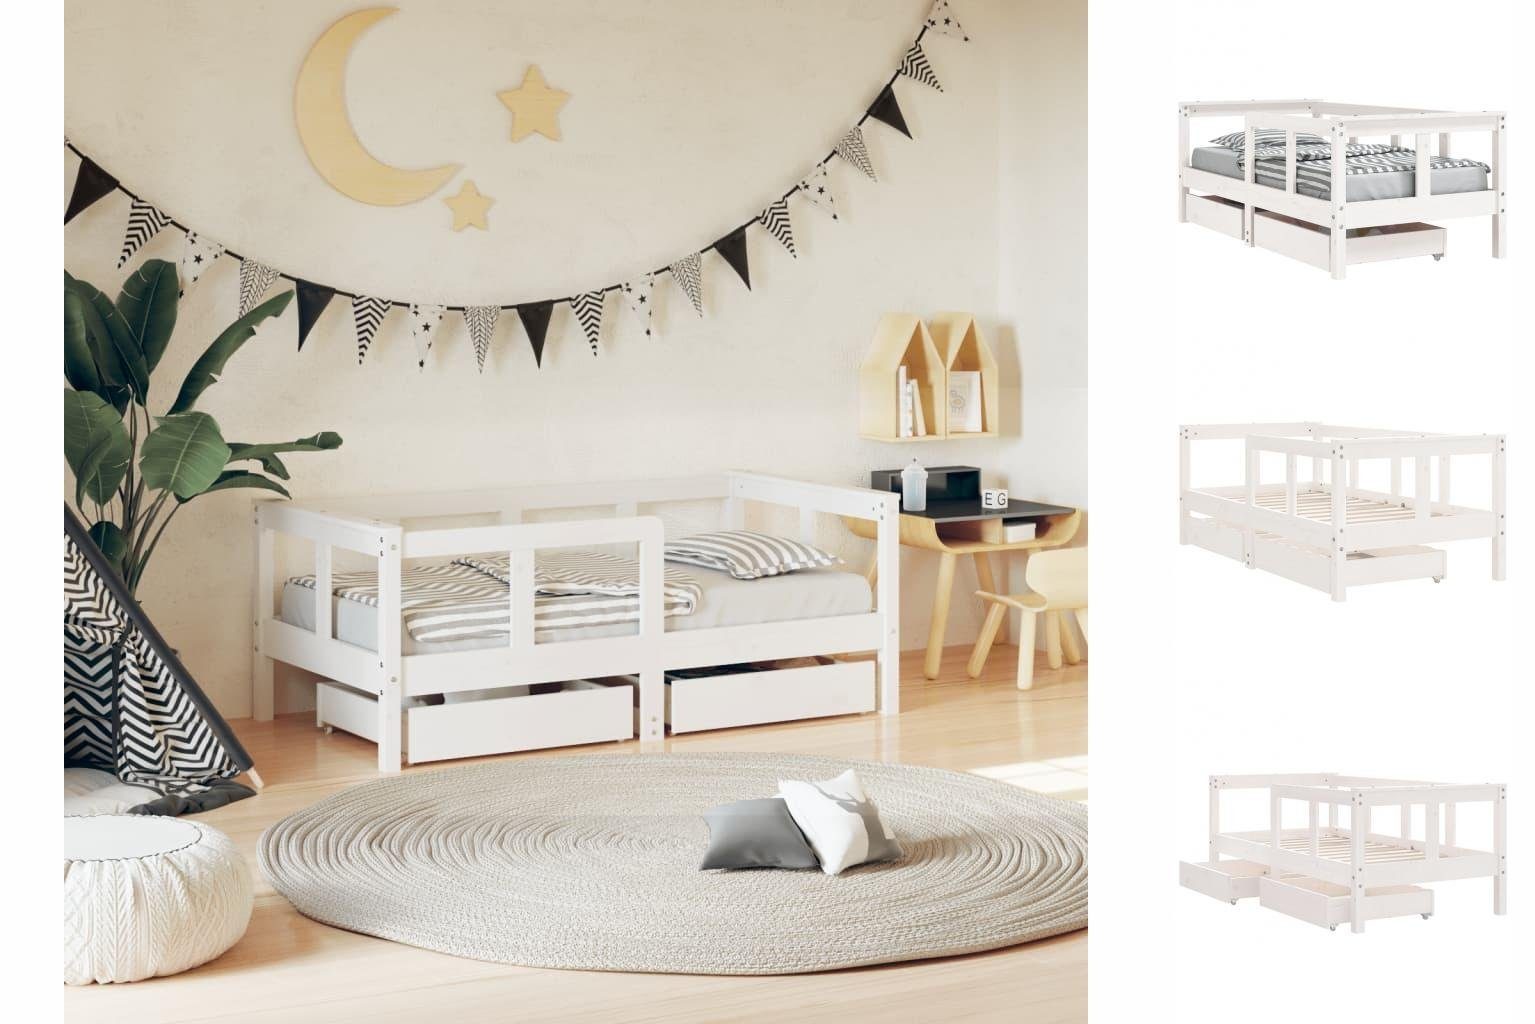 vidaXL Kinderbett Kinderbett mit Schubladen Weiß 70x140 cm Massivholz Kiefer